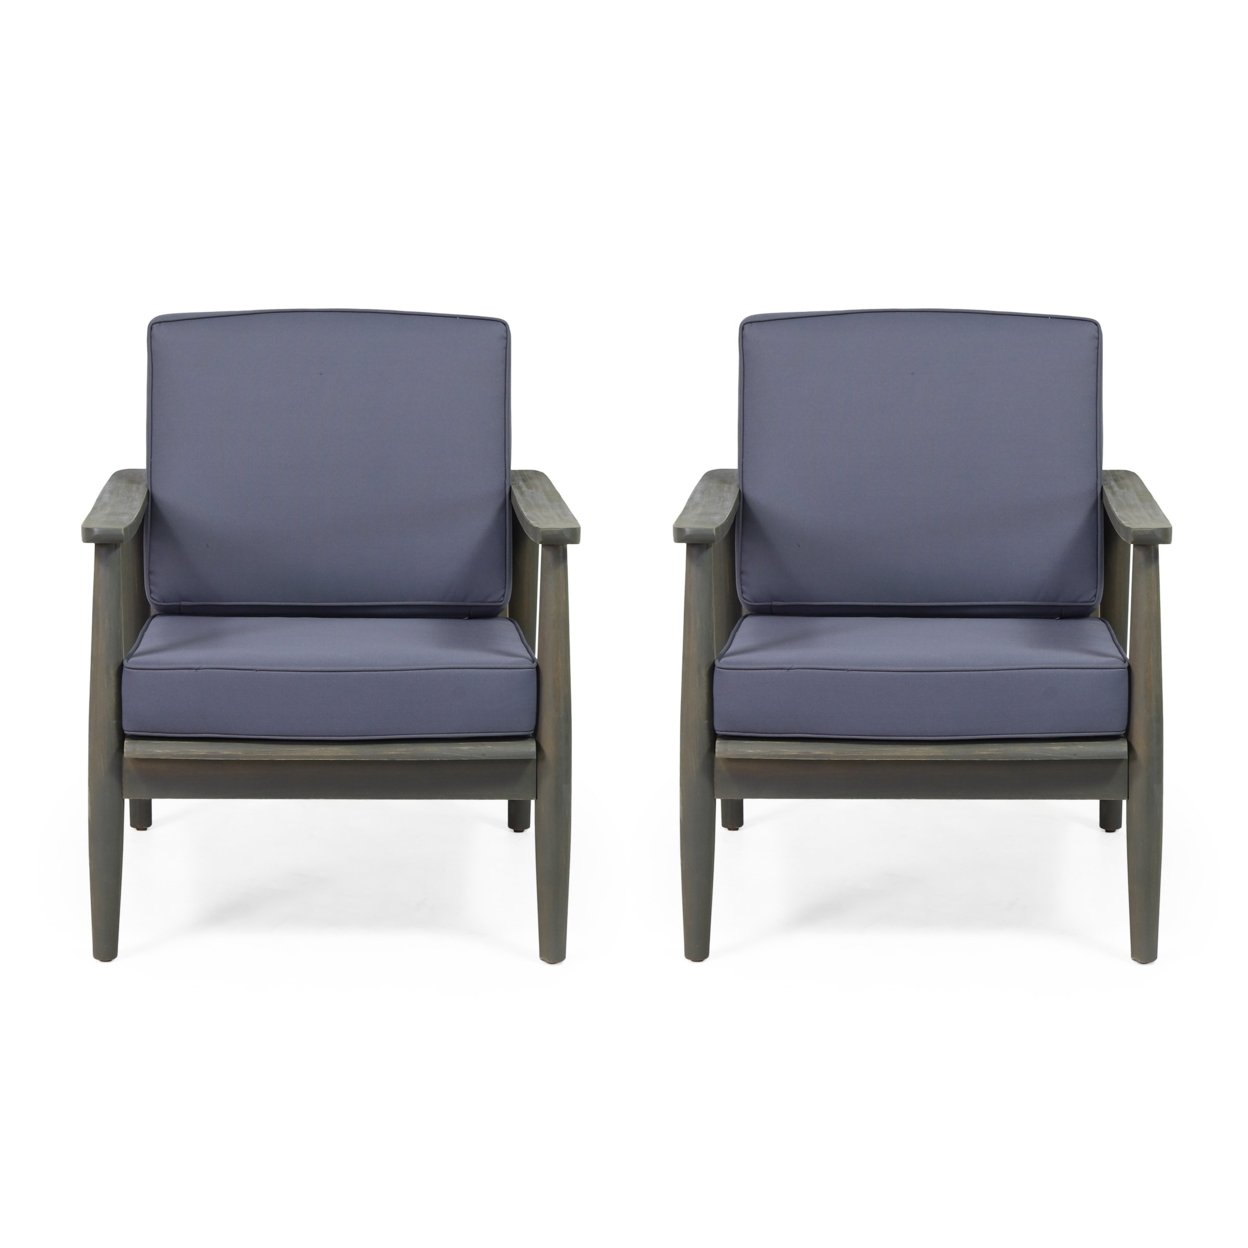 Emmry Outdoor Acacia Wood Club Chair, Set Of 2 - Gray/dark Gray